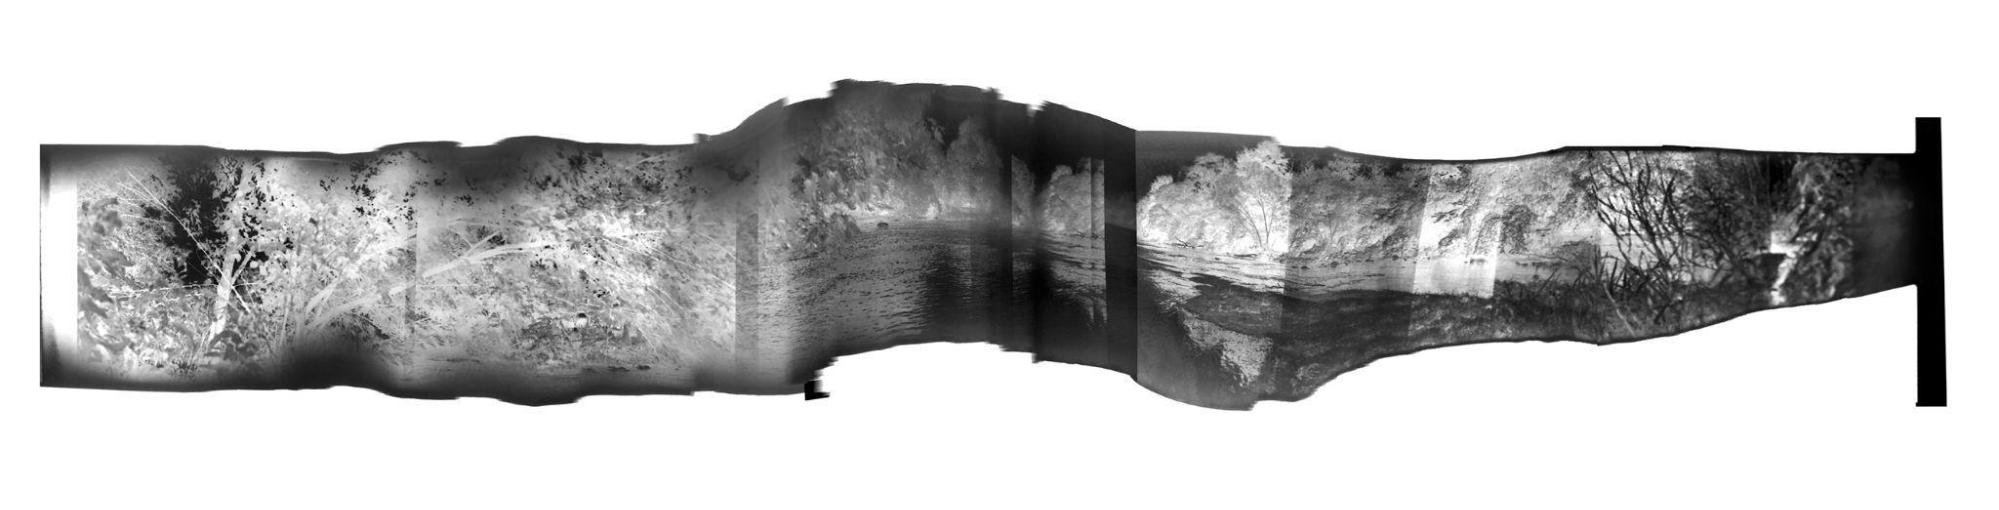 Barbara Ciurej and Lindsay Lochman, River 4, 2021, Negative rephotographed with handheld iPhone in panorama mode, Digital print, edition of 2 + 1 AP, 8” x 36”